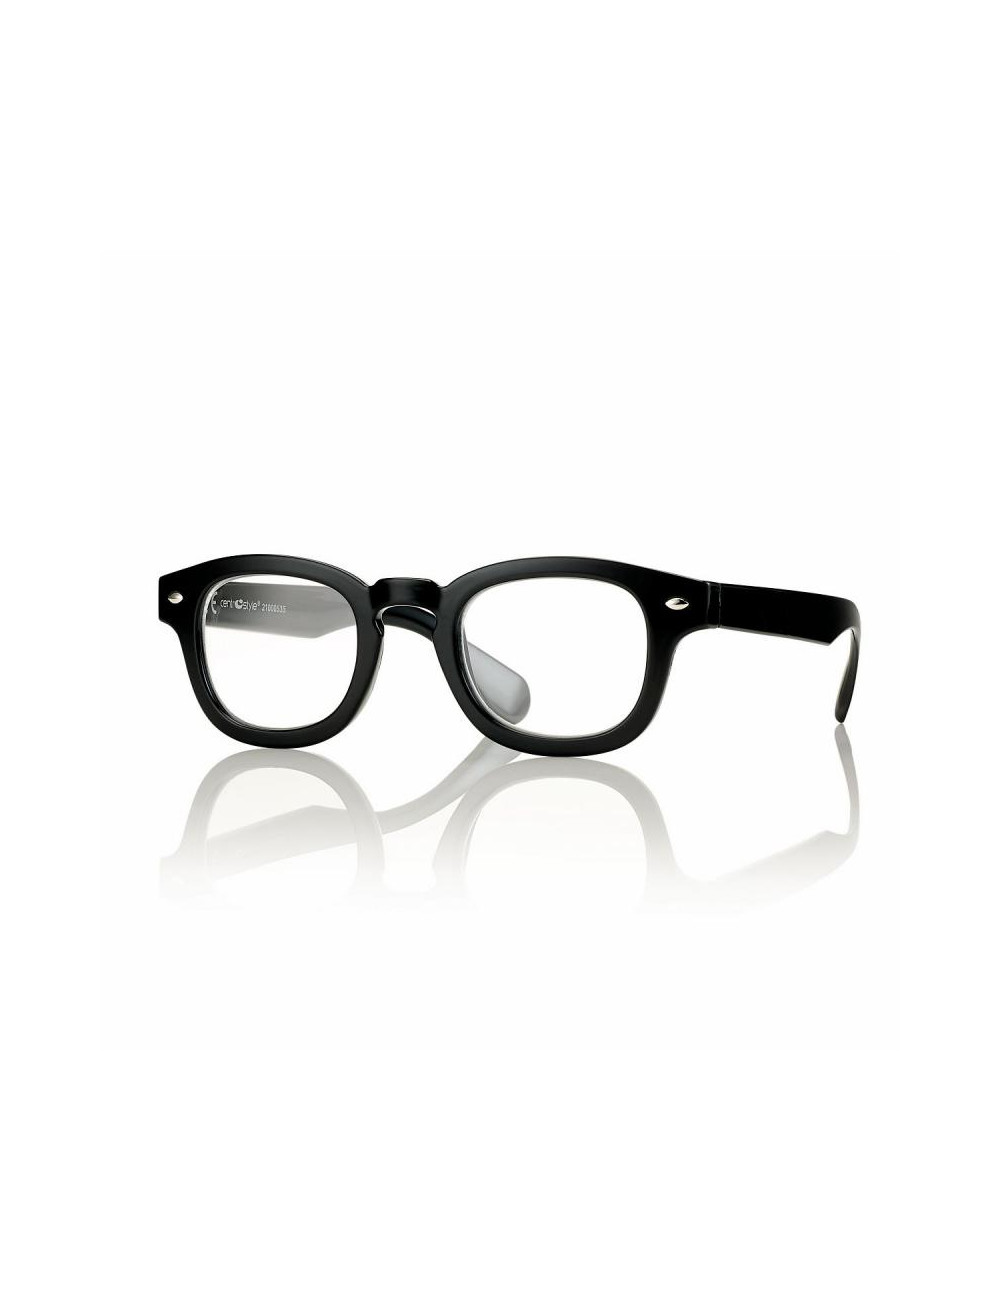 Centrostyle Smart R0358 black reading glasses